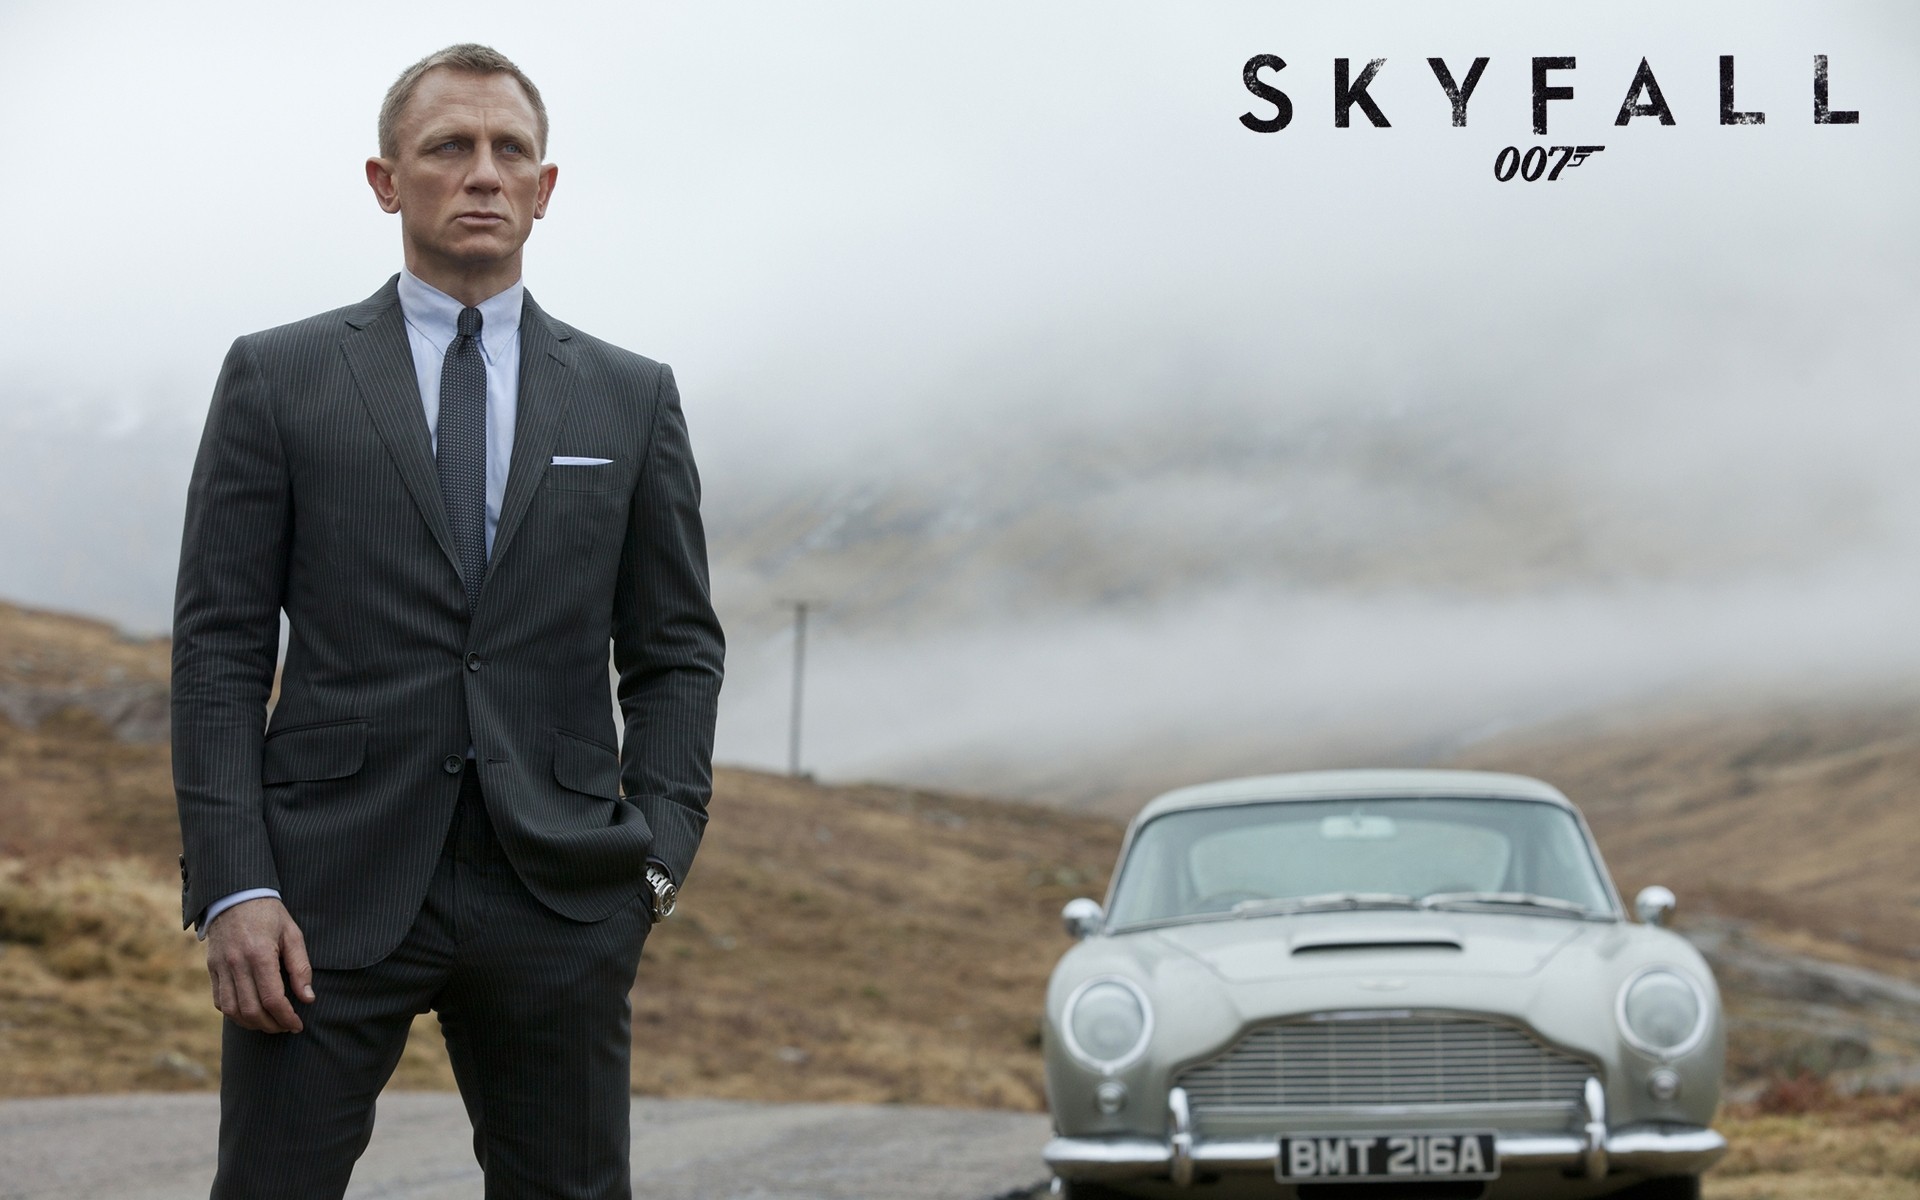 movies outdoors car man vehicle road 007 agent bond agent bond 007 skyfall